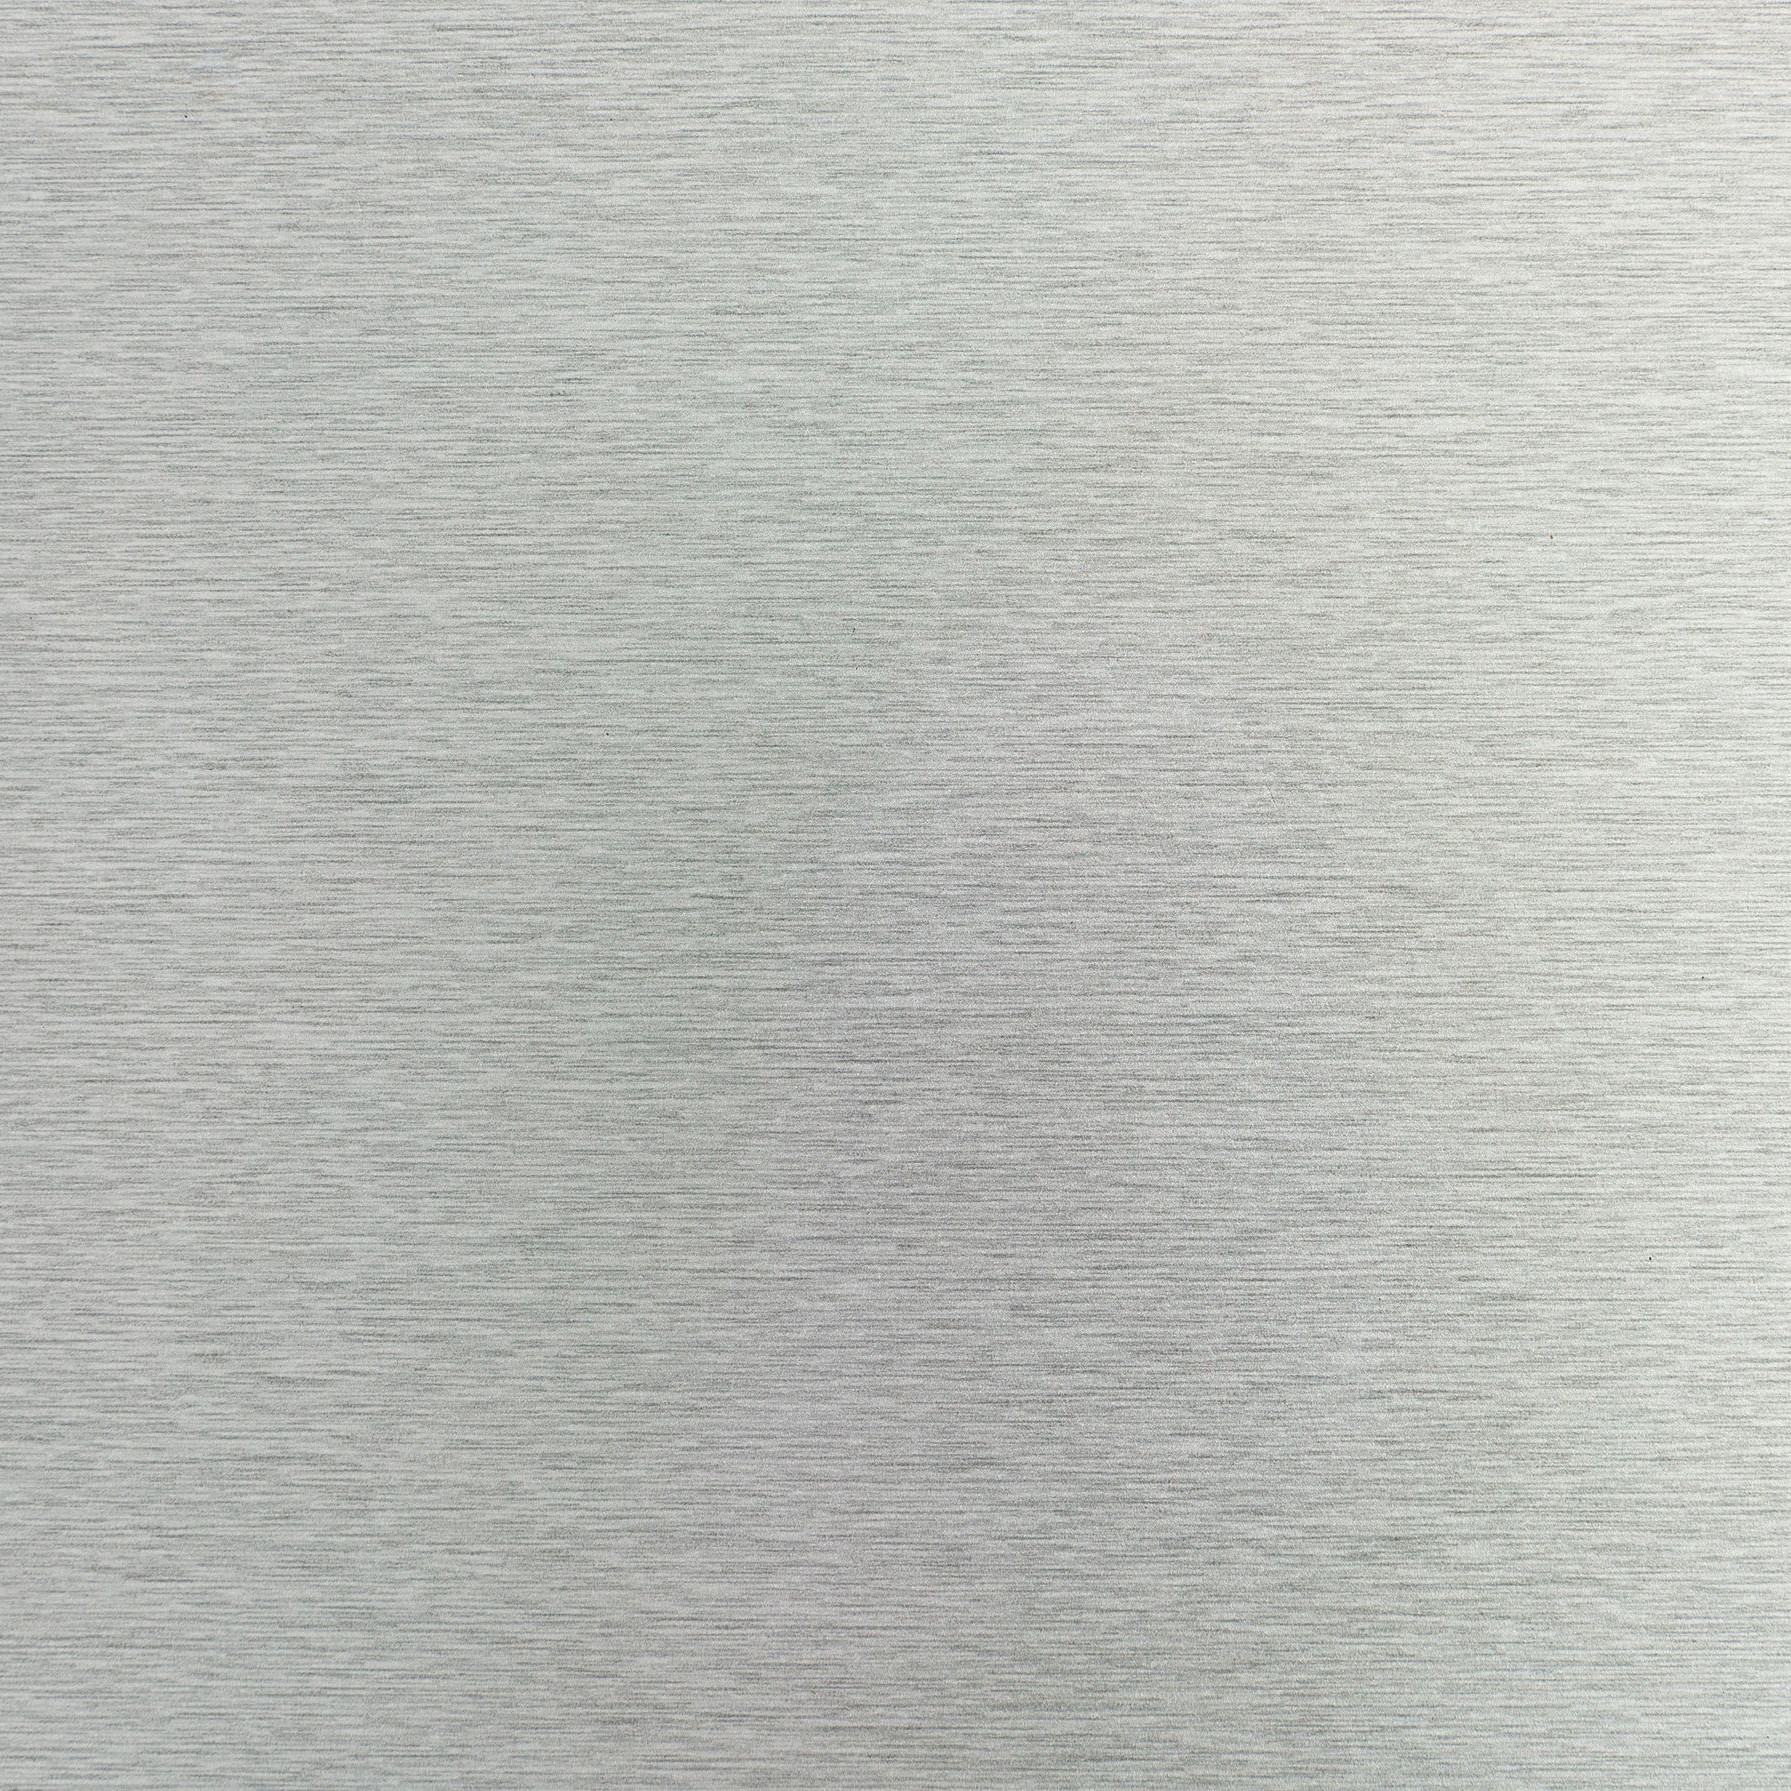 UniCote LUX Stramit Silver Quartz Swatch